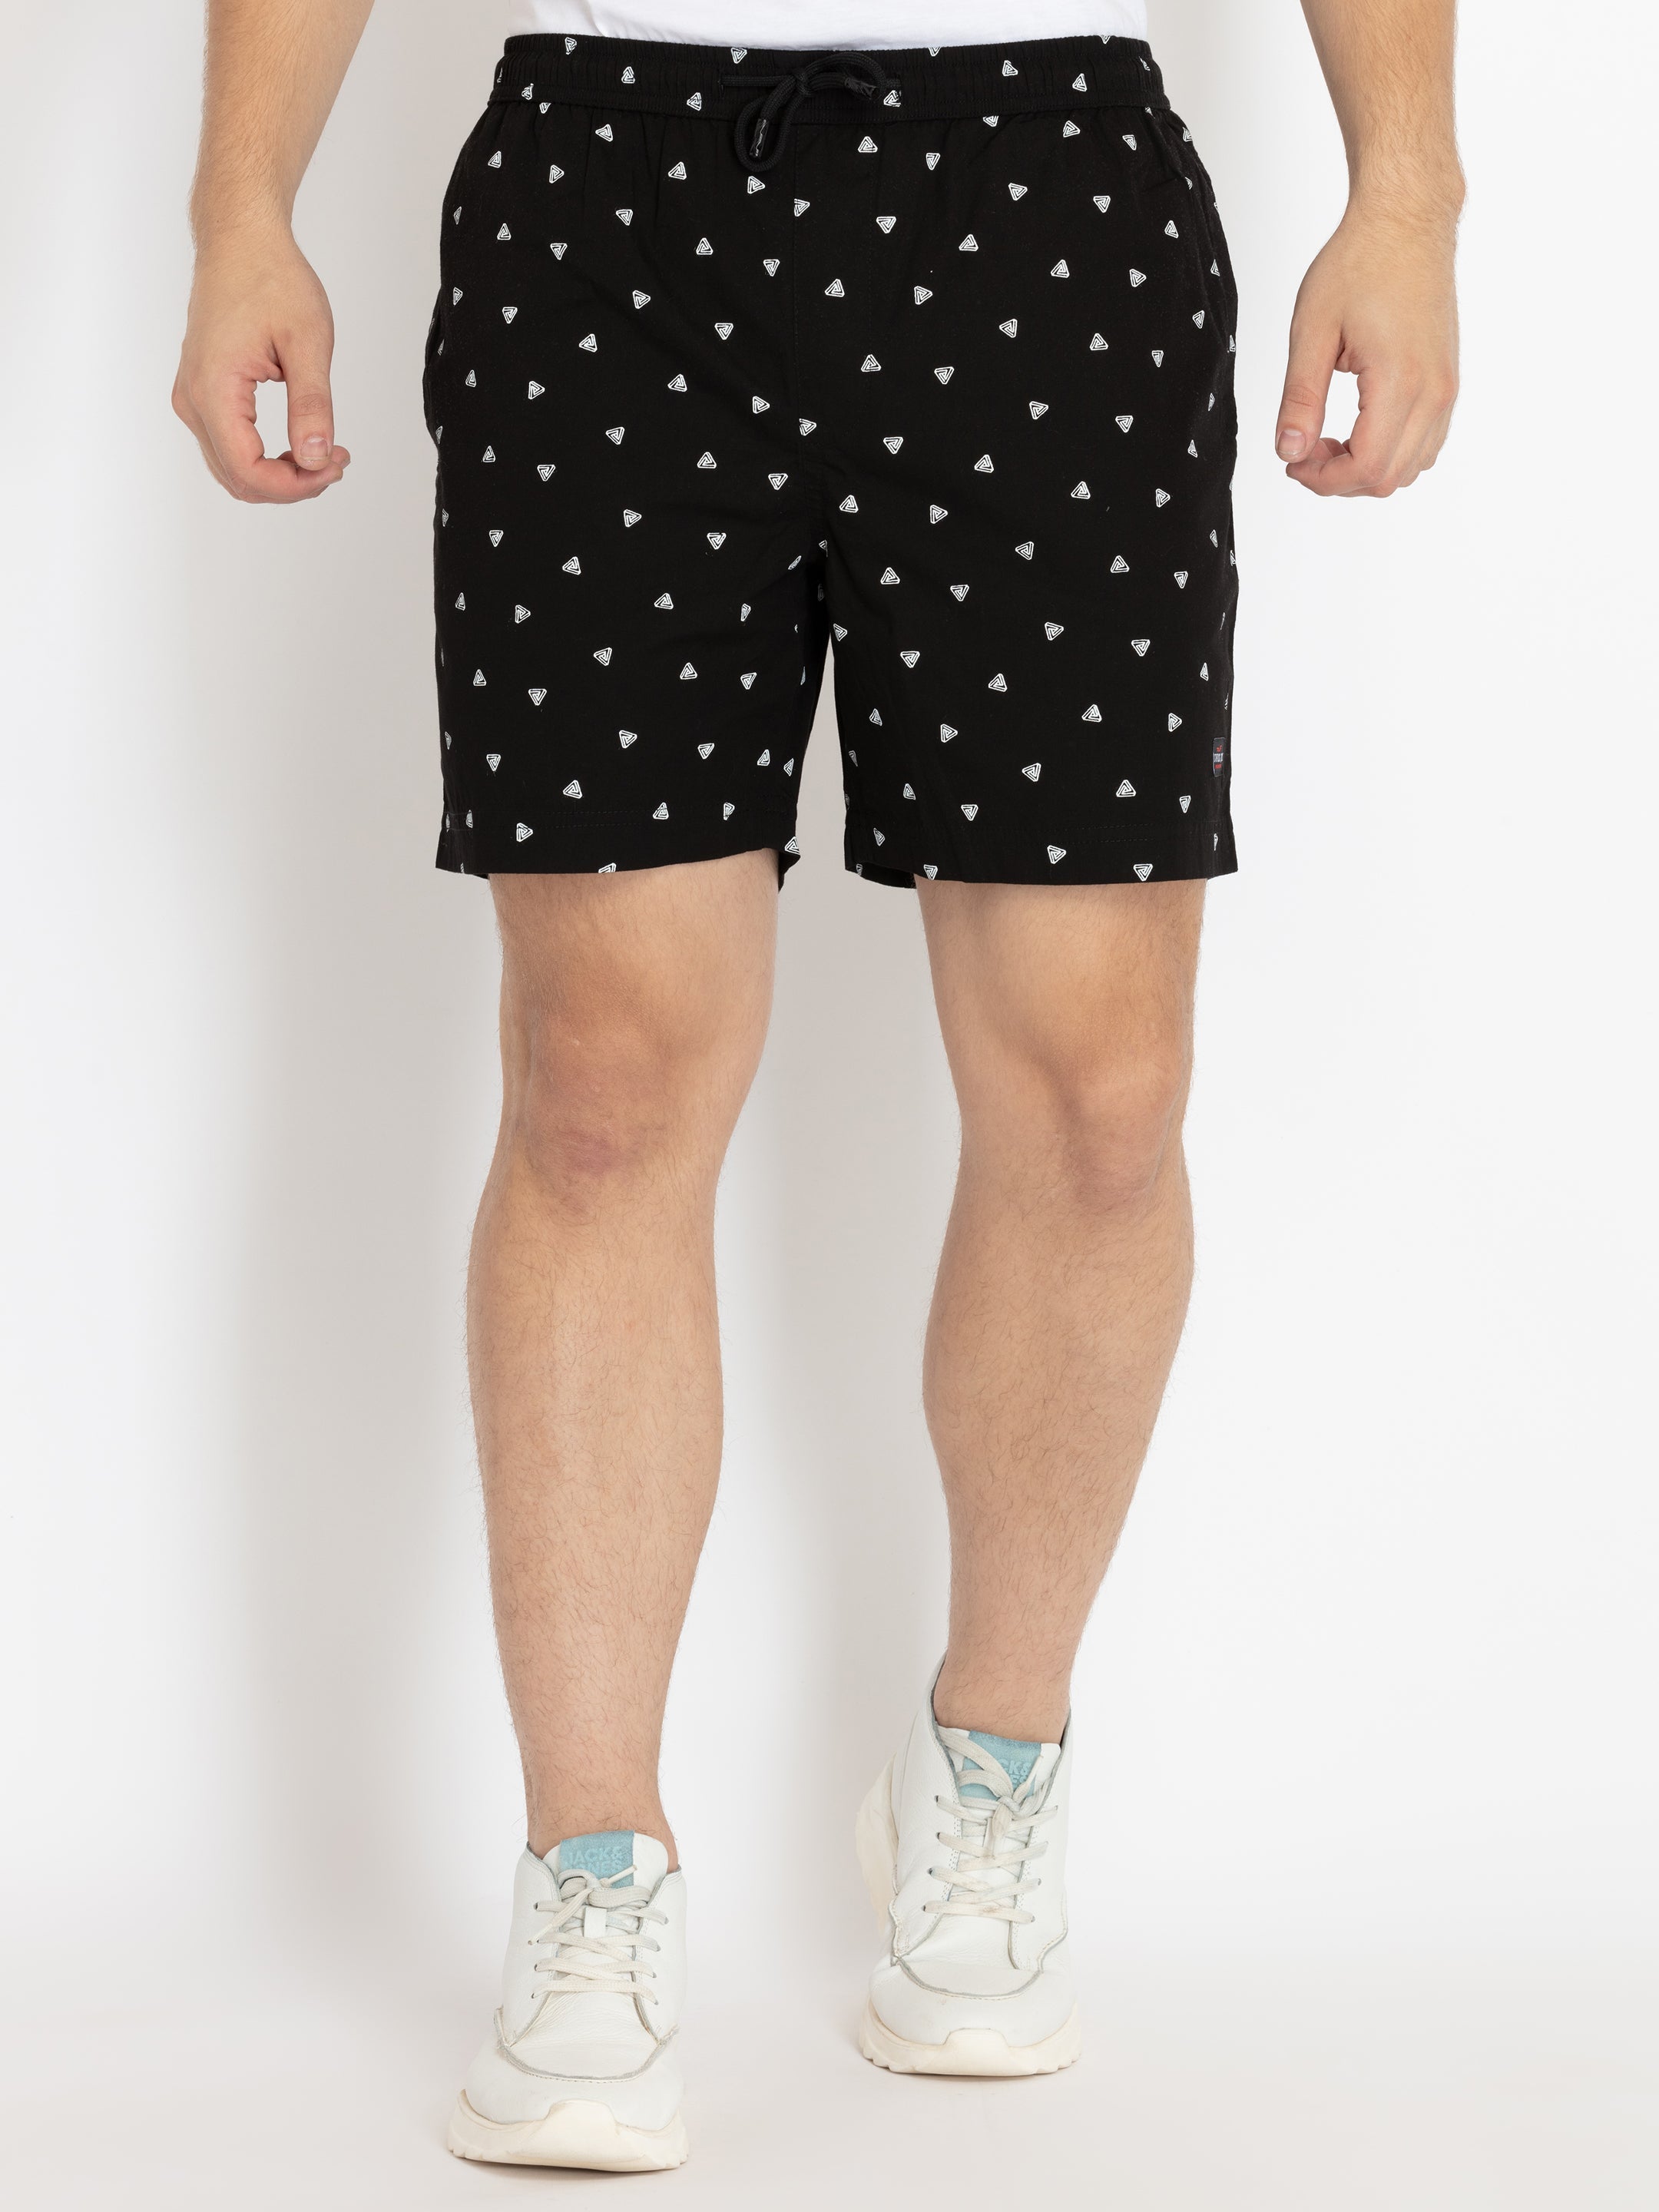 Status Quo |Men's Printed Shorts - S, M, L, XL, XXL